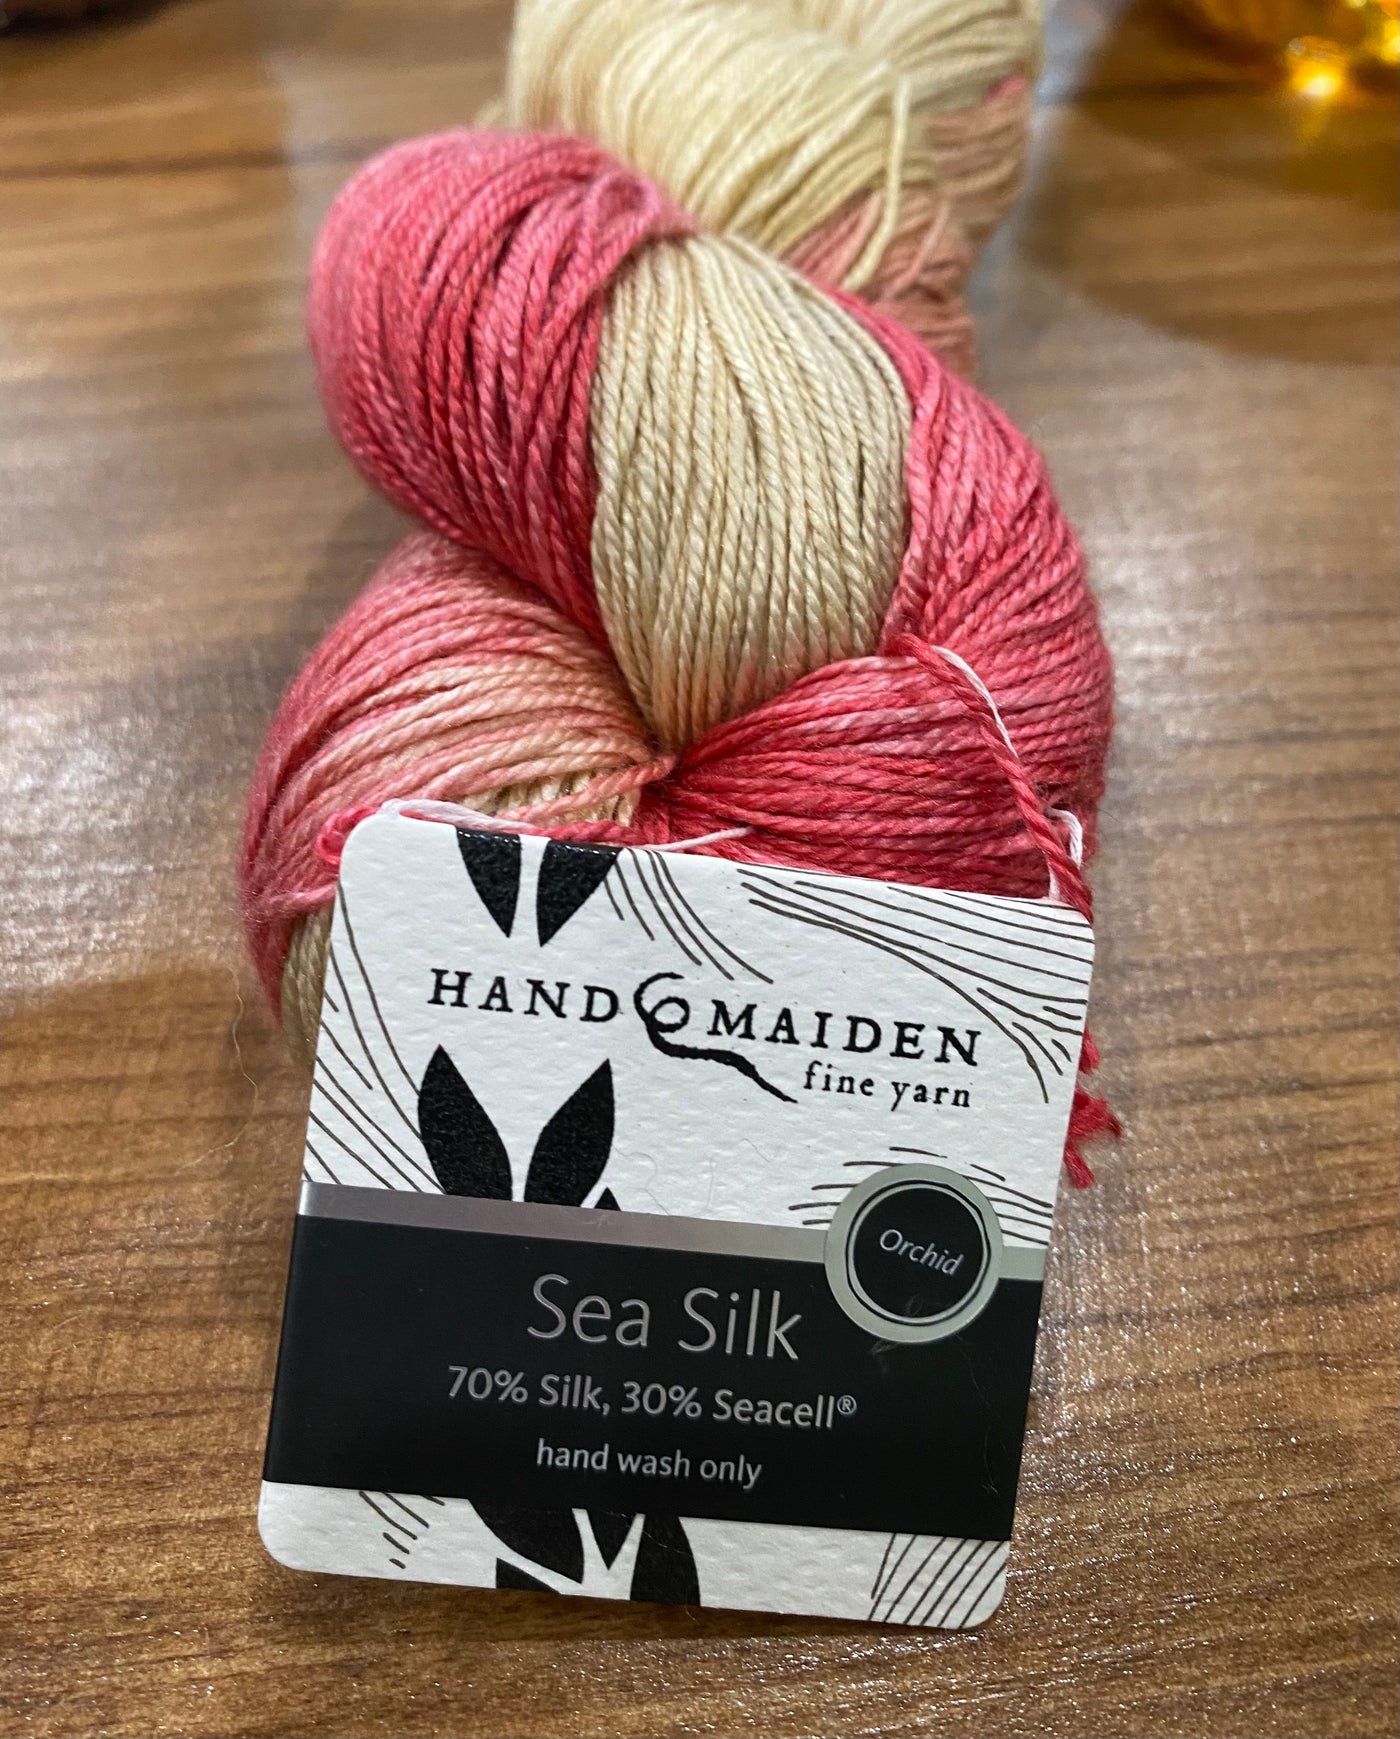 Hand Maiden - Swiss Mountain Sea Silk - 70% Silk 30% Seacell